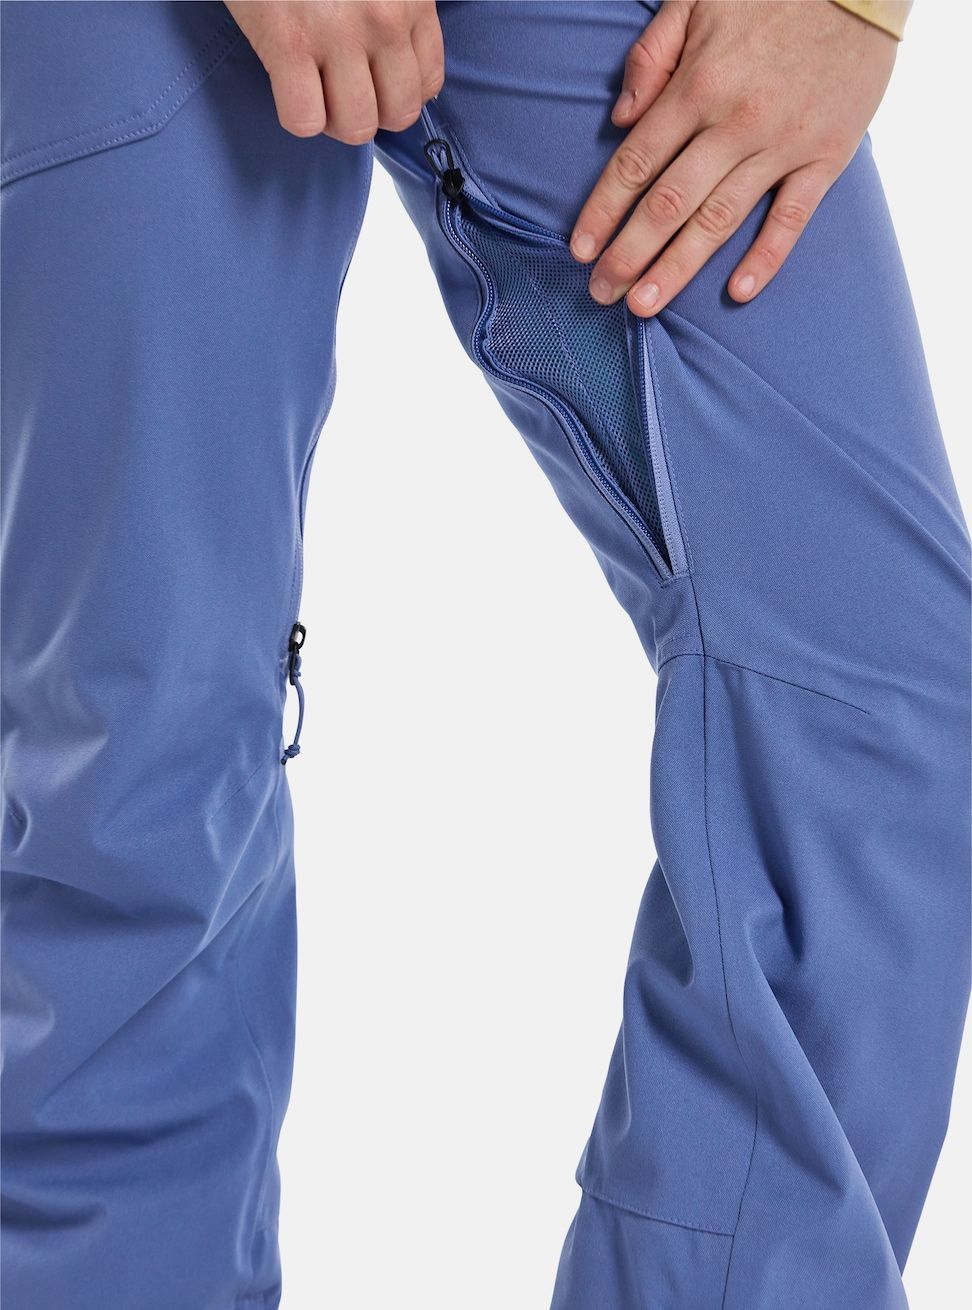 Women's Burton Vida Stretch 2L Pants Slate Blue - Burton Snow Pants